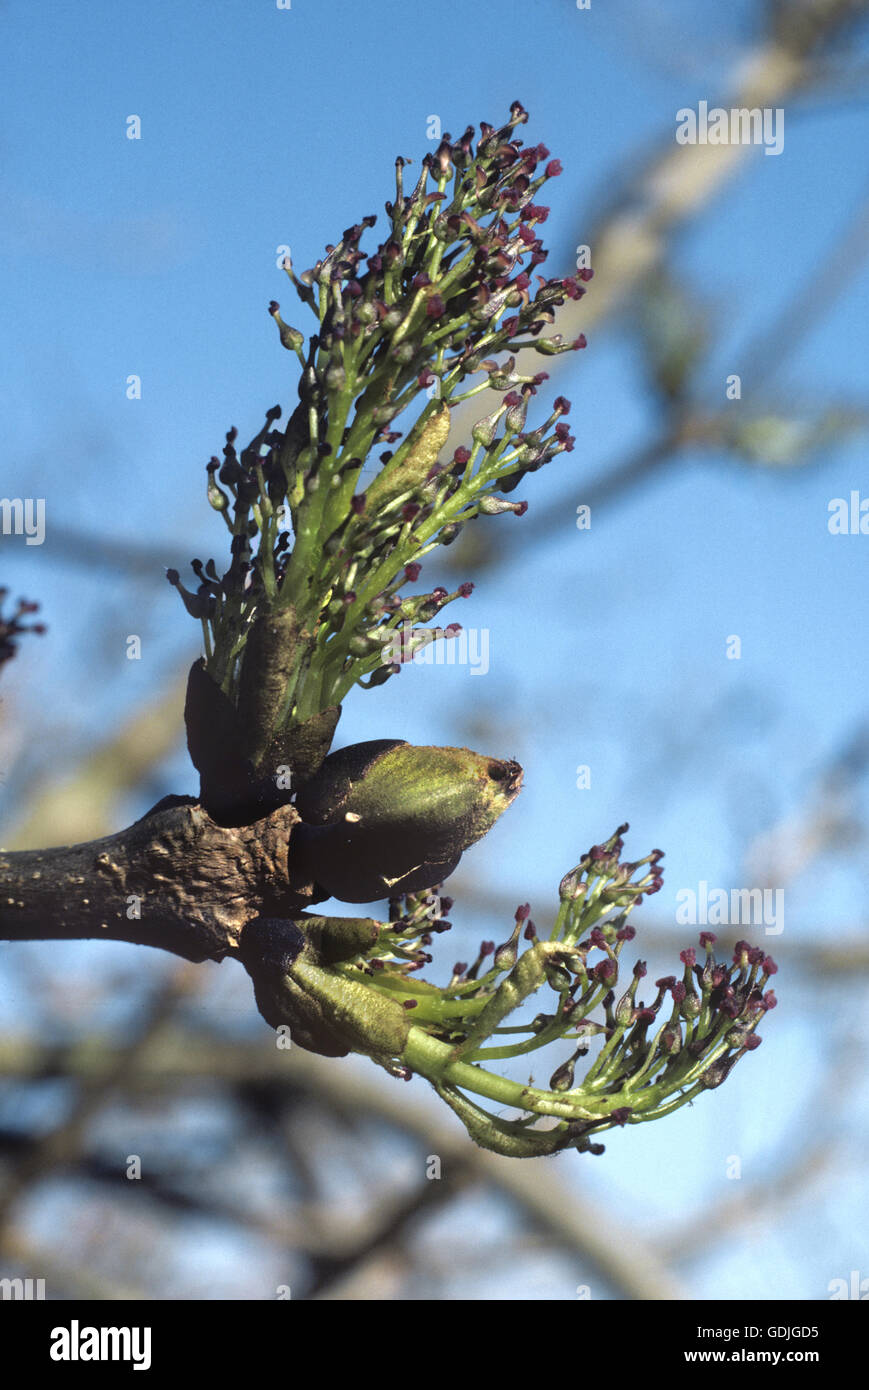 Ceneri - Fraxinus excelsior Oleaceae | Piante ornamentali - Fiori. Foto Stock